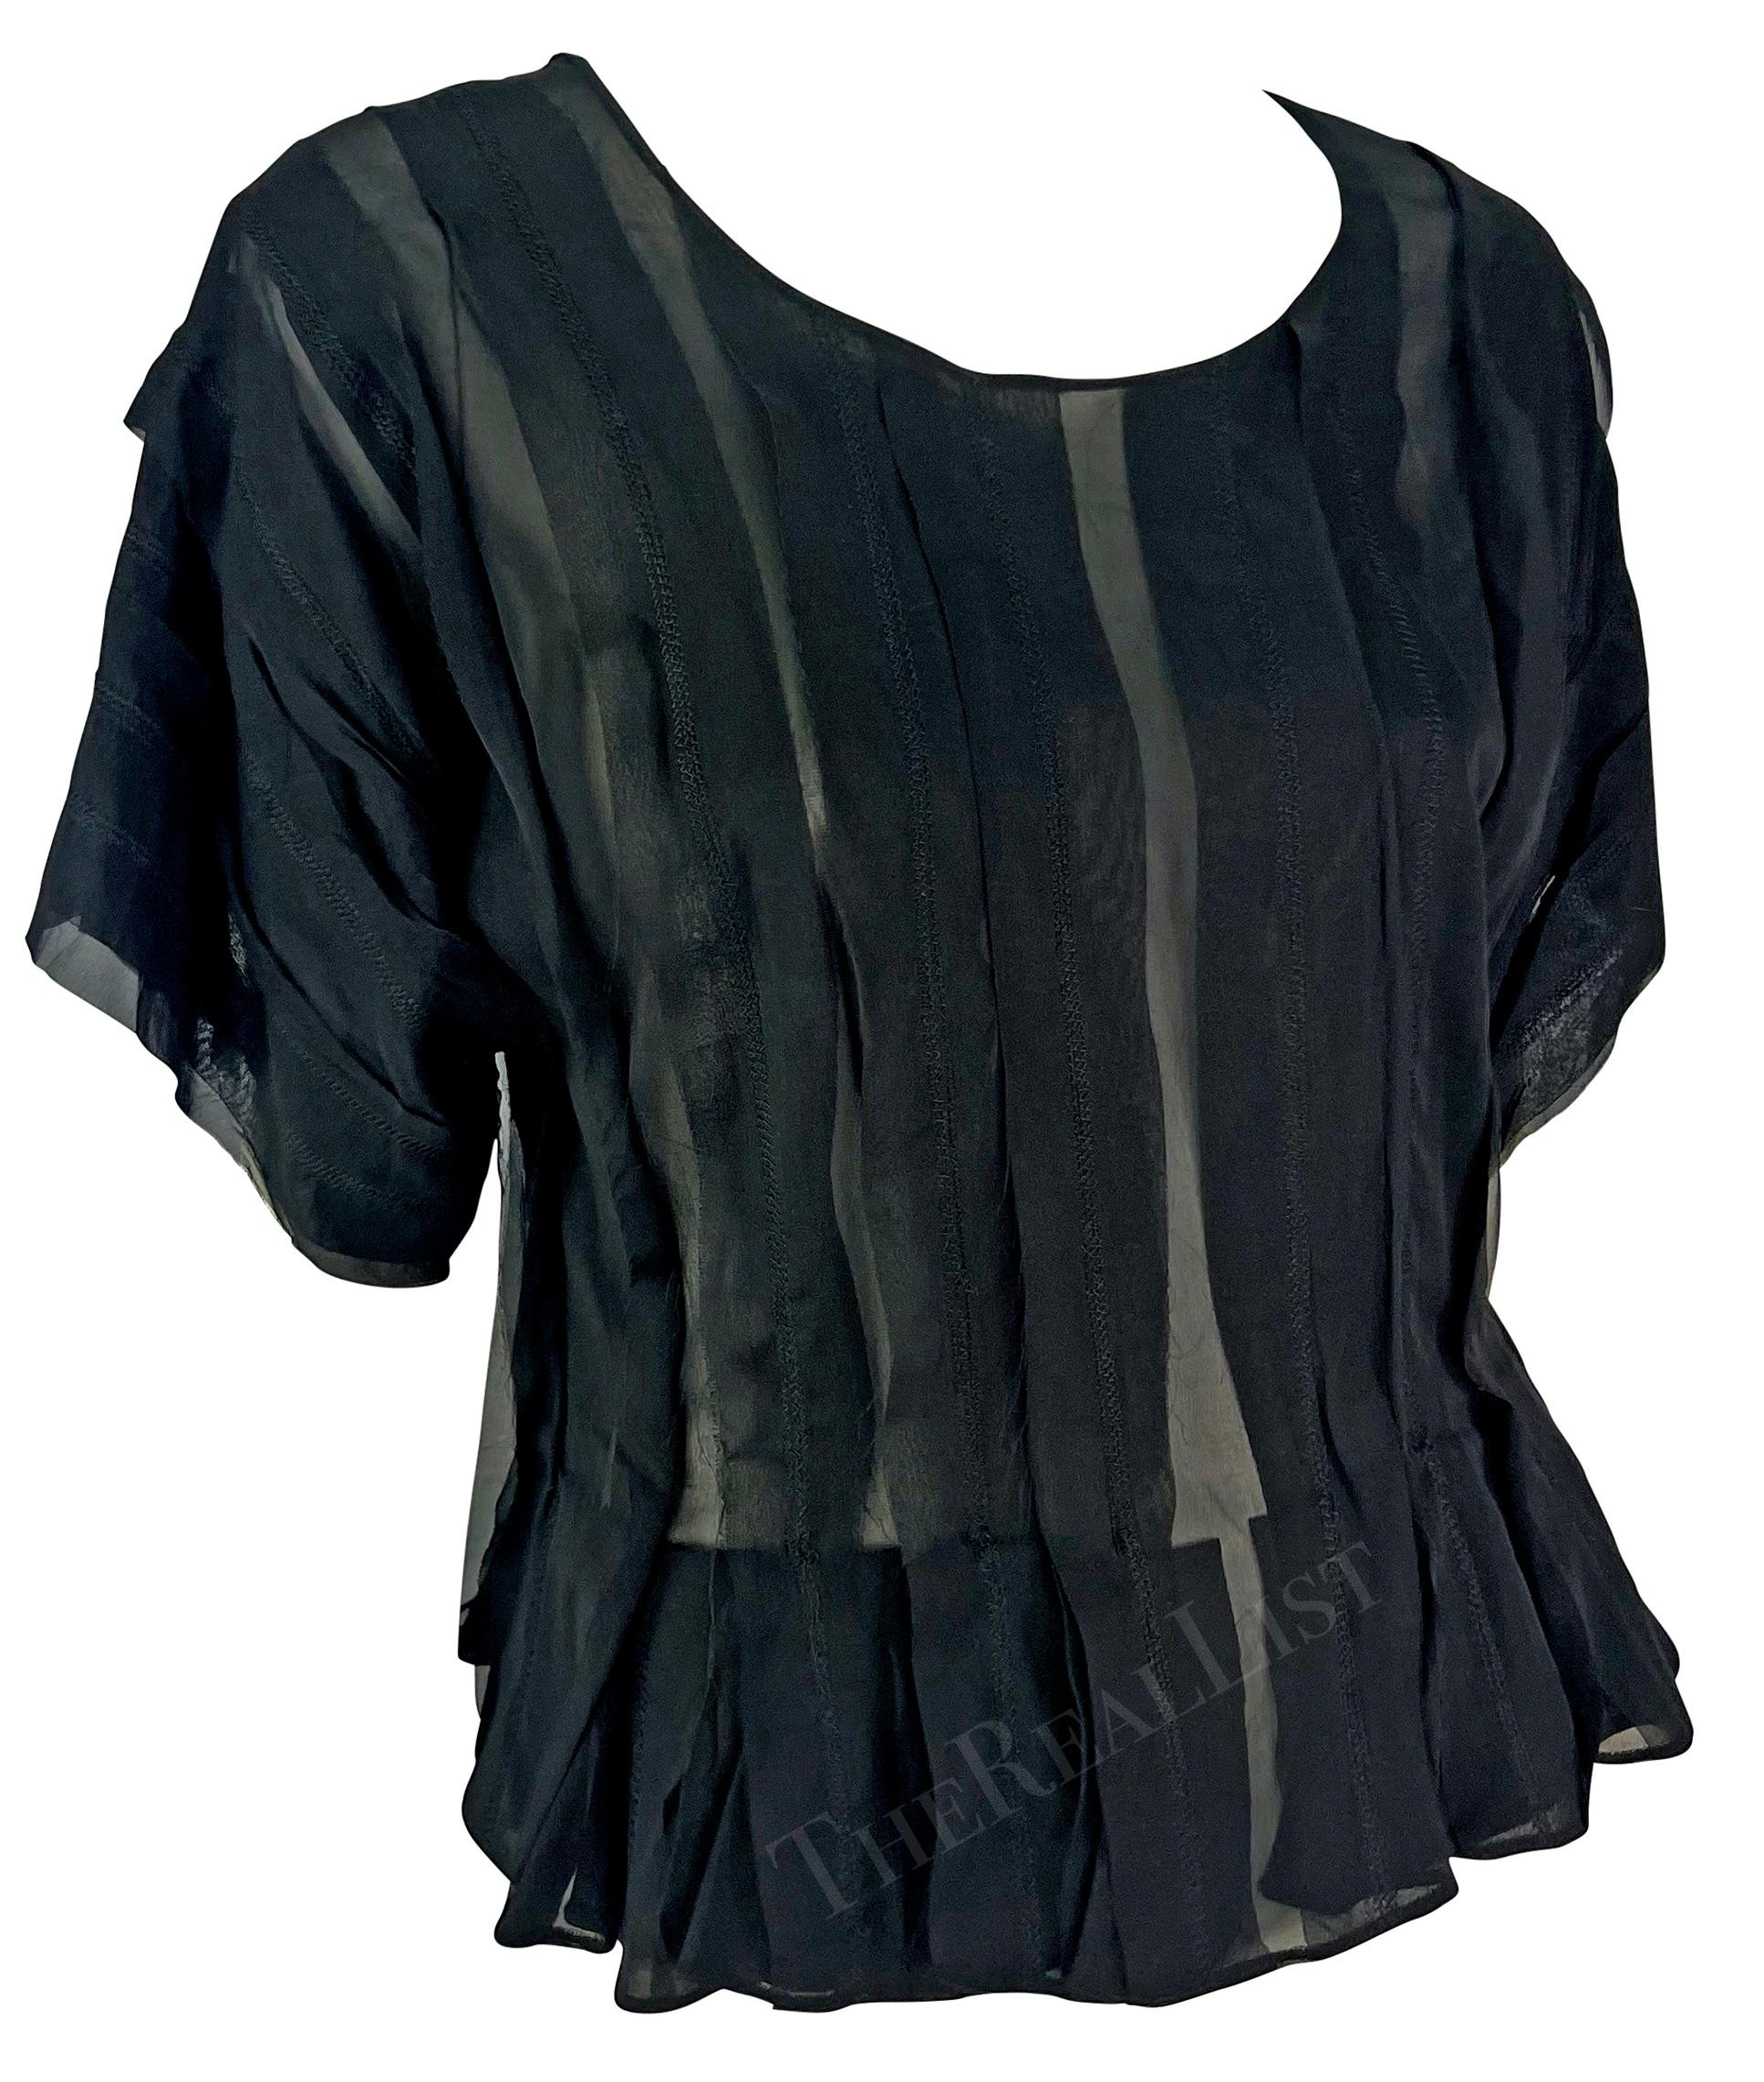 S/S 2002 Yves Saint Laurent by Tom Ford Safari Black Short Sleeve Sheer Silk Top For Sale 1